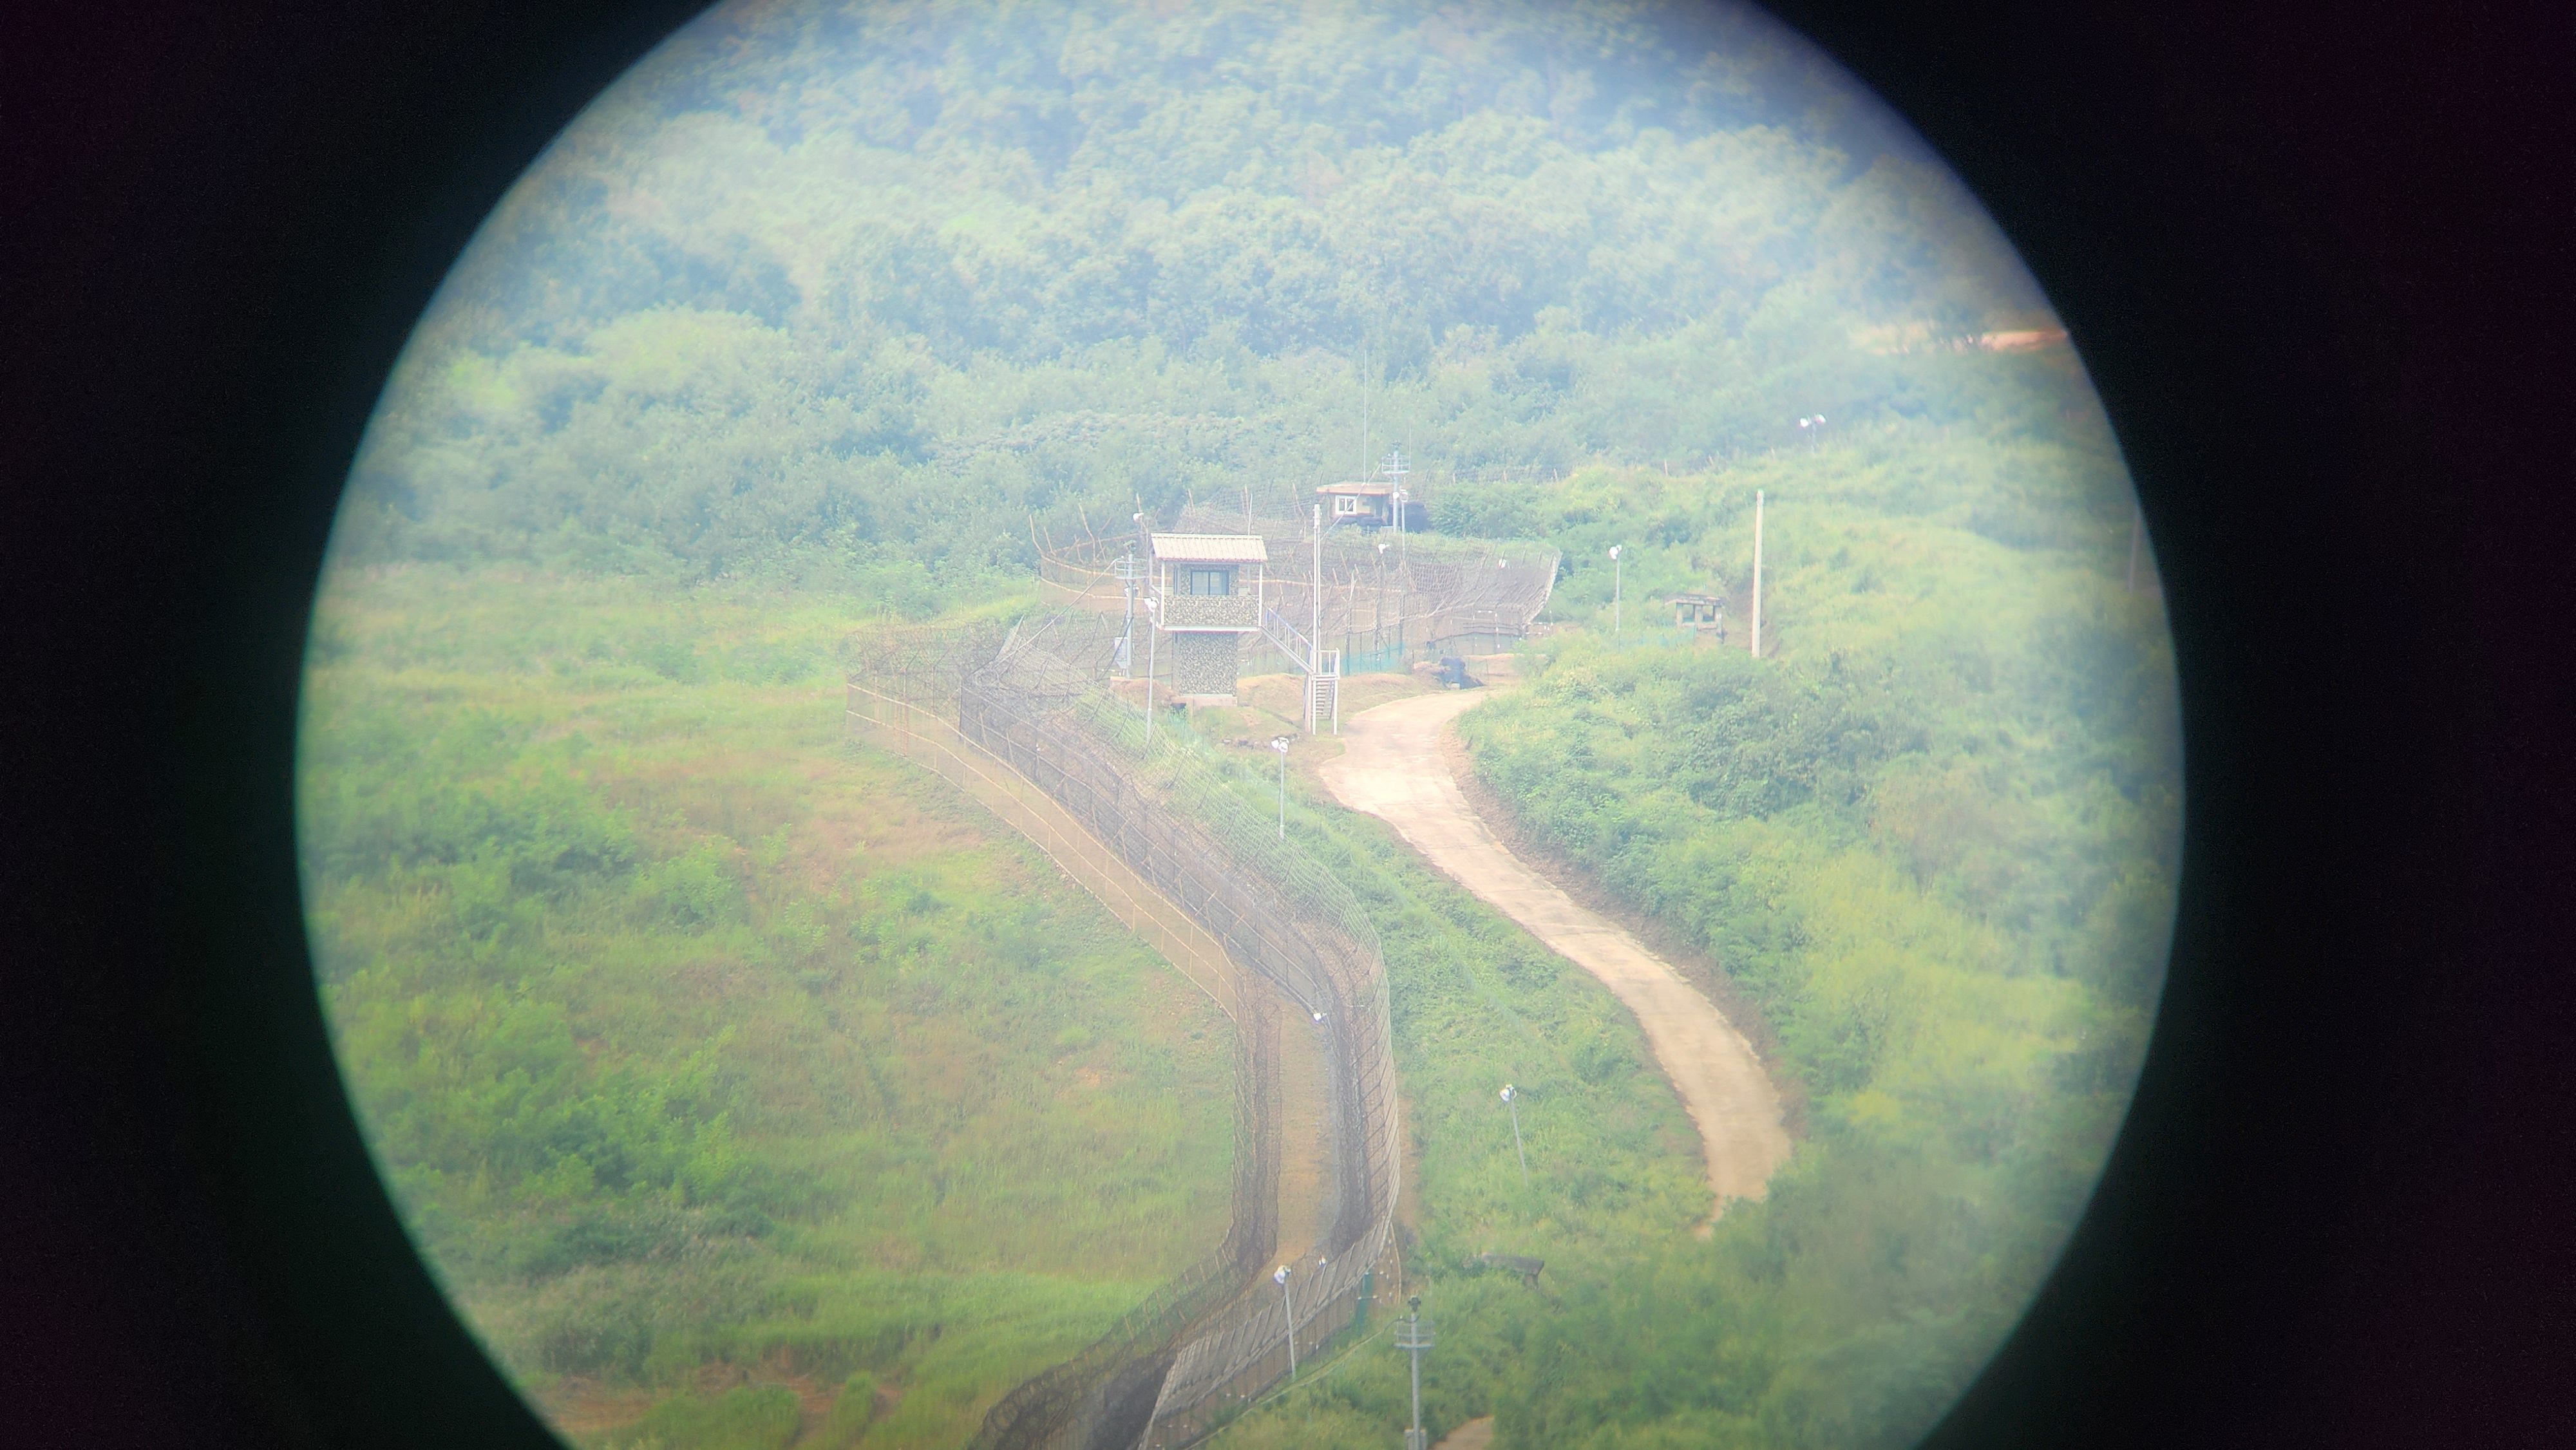 The South Korea/North Korea DMZ was unbelievable to visit